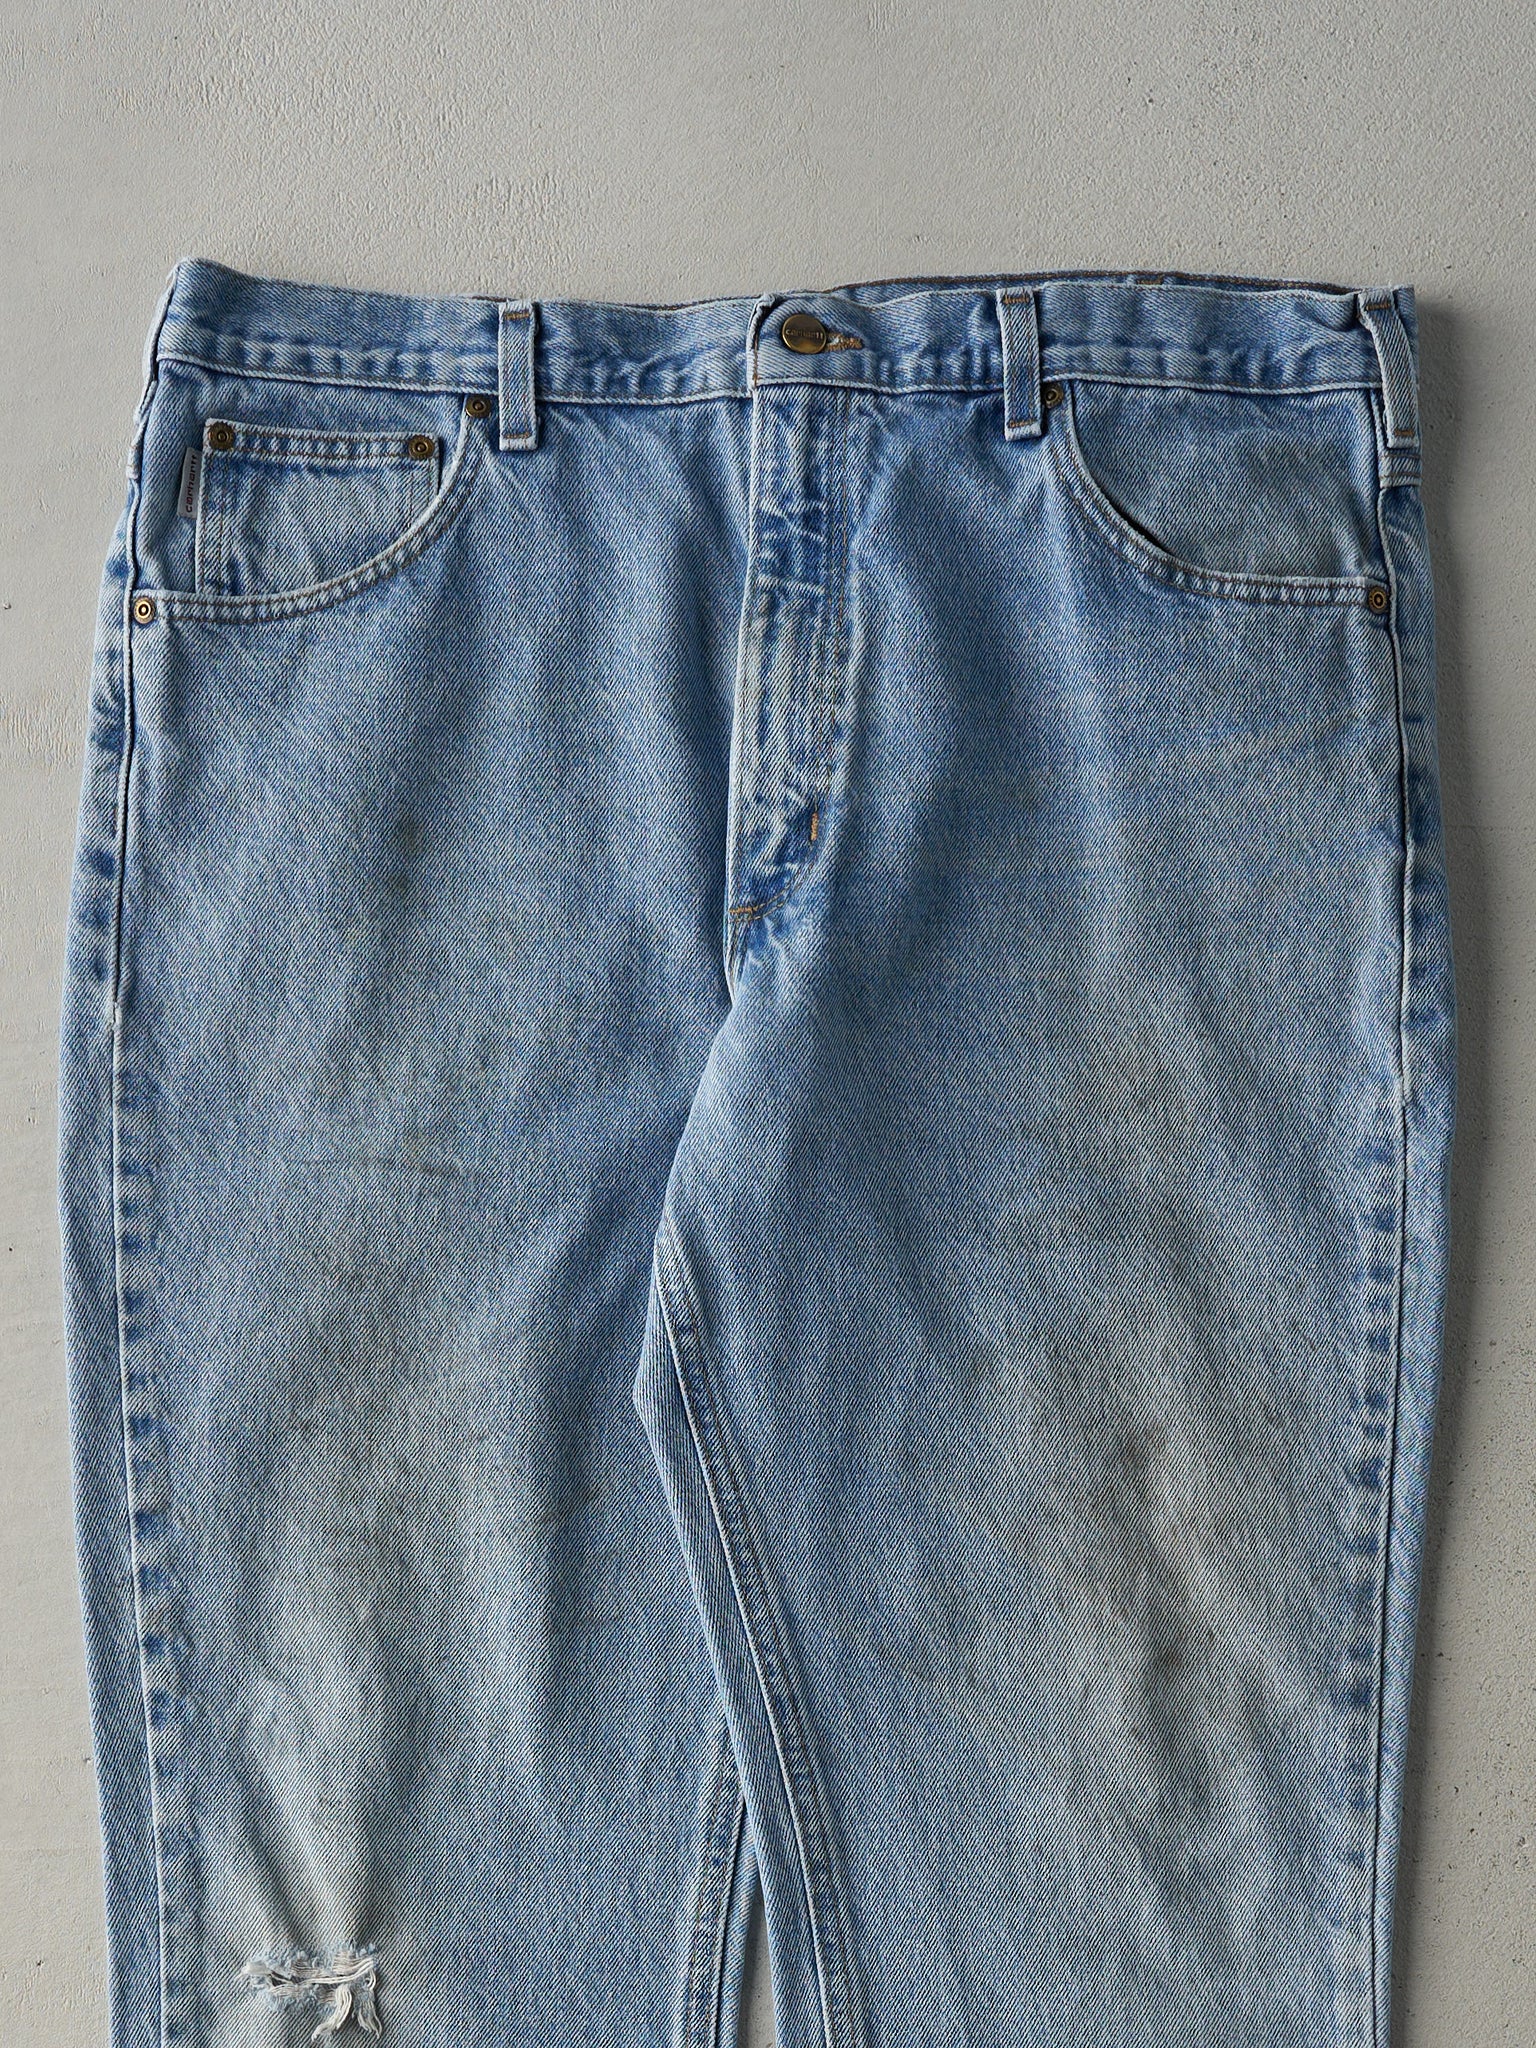 Vintage 90s Light Wash Carhartt Jeans (37x29)